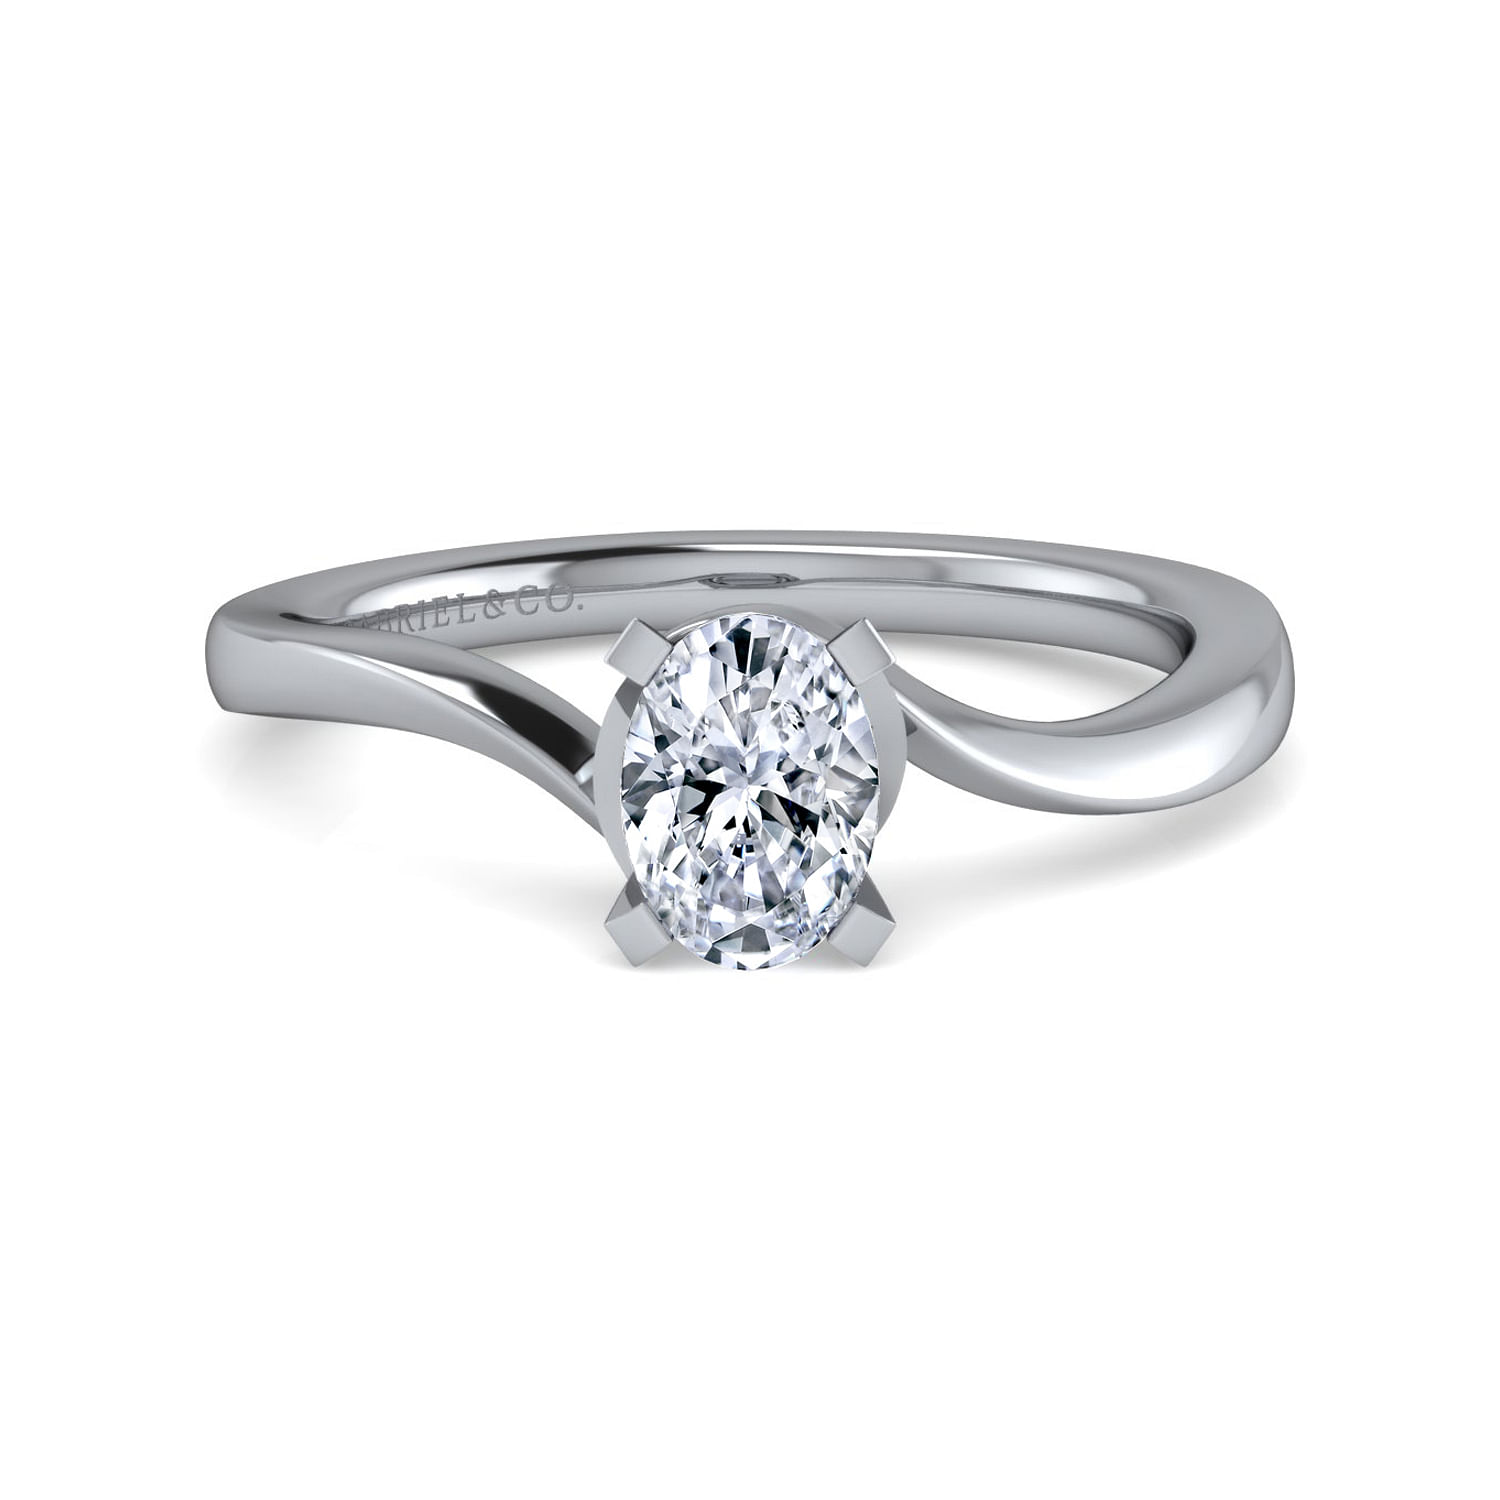 Blair - 14K White Gold Oval Diamond Engagement Ring